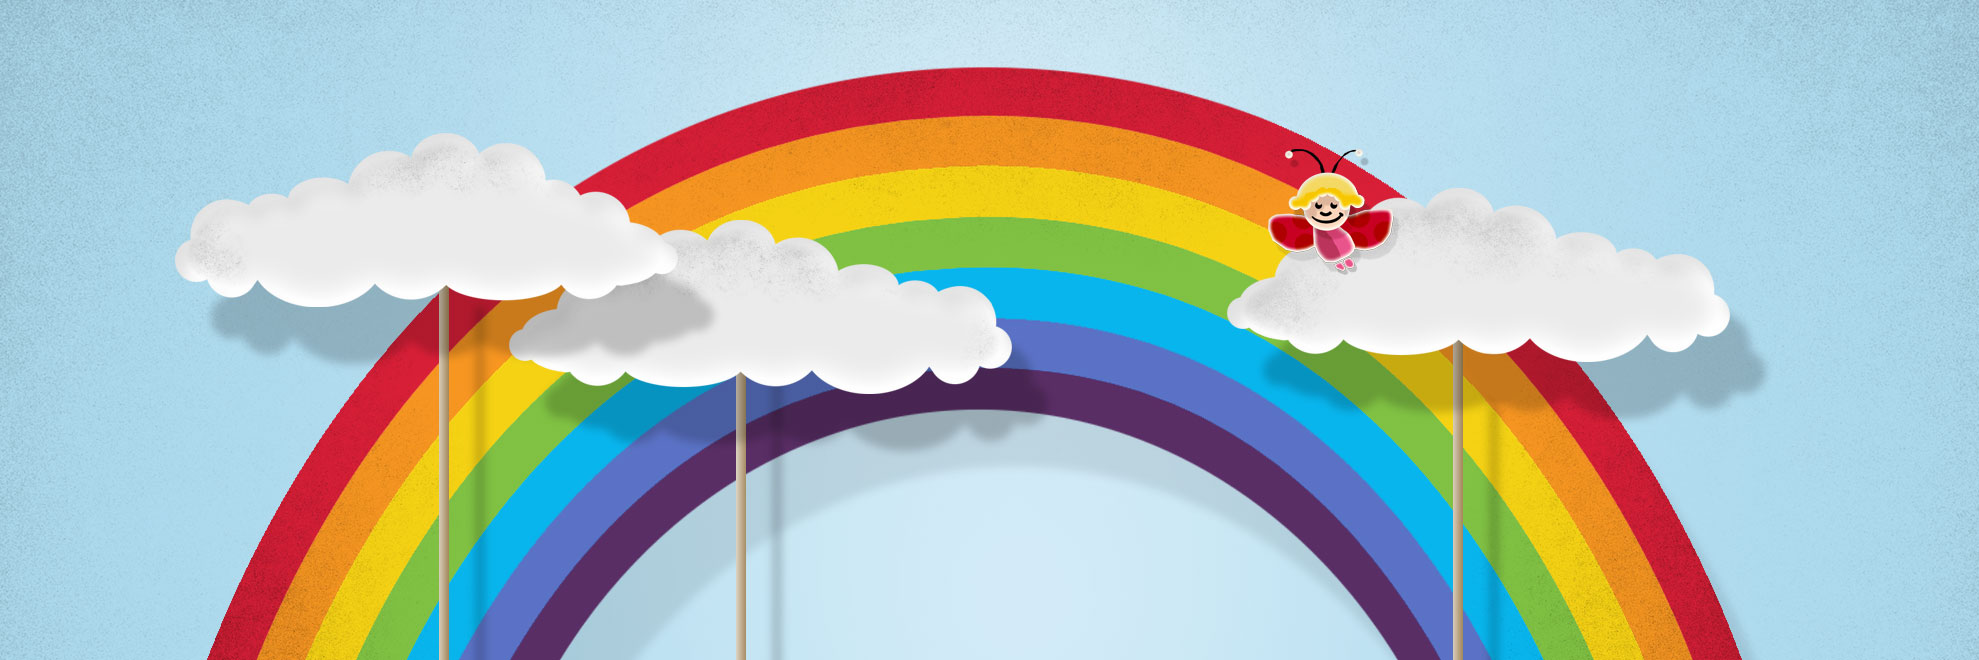 Der regenbogens in farben richtigen reihenfolge des 10 Regenbogen